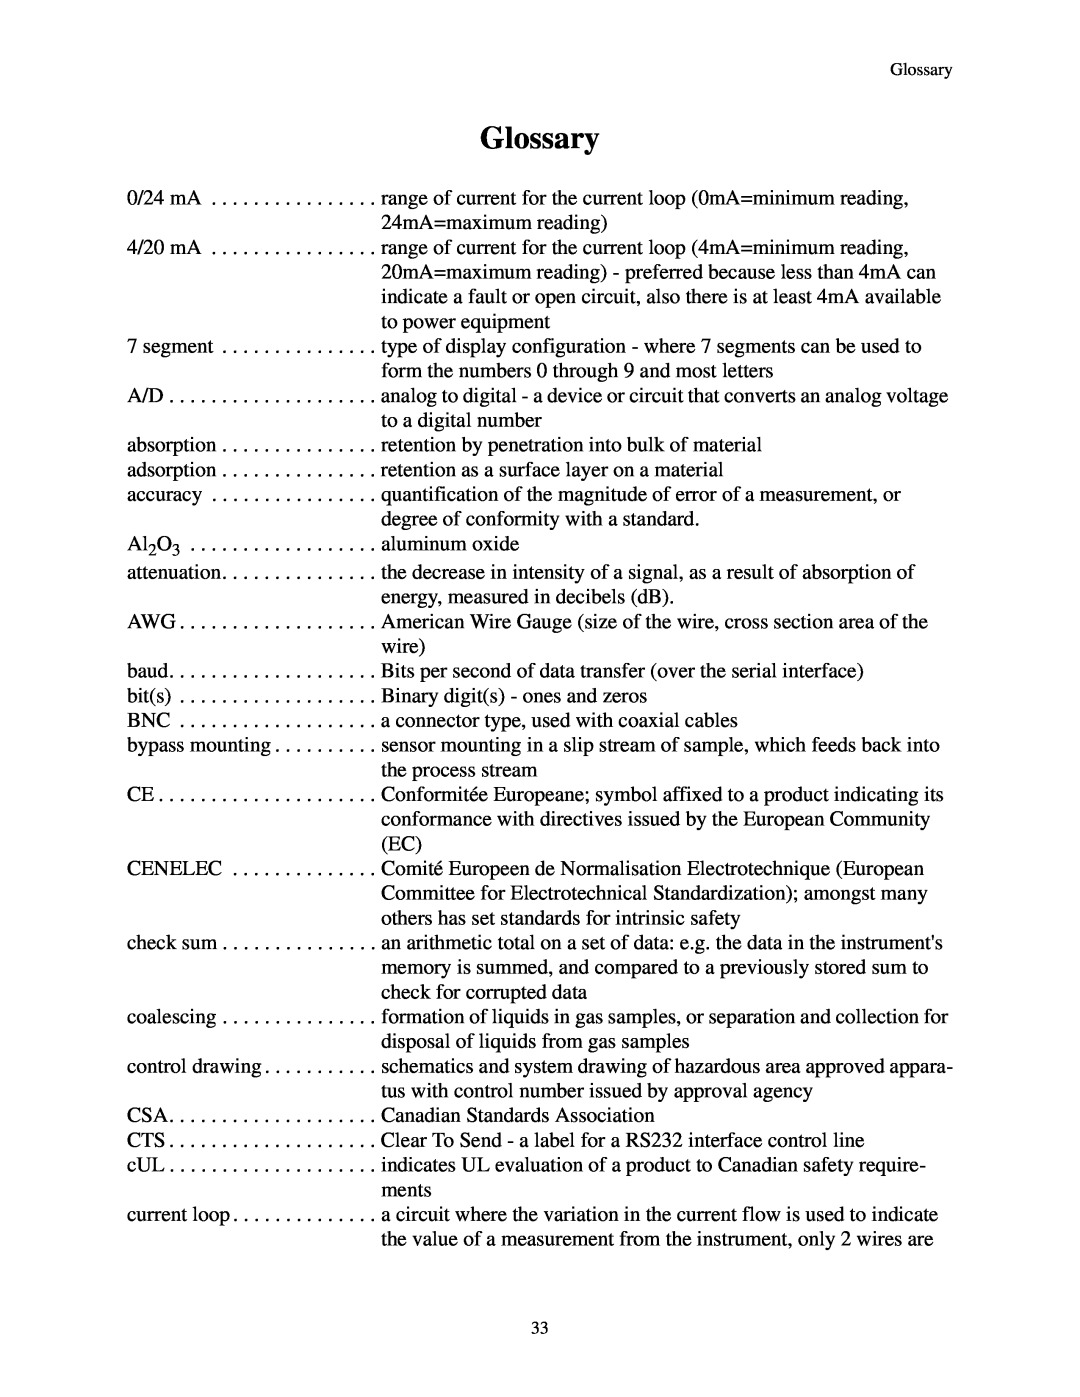 Epson XDT manual Glossary 